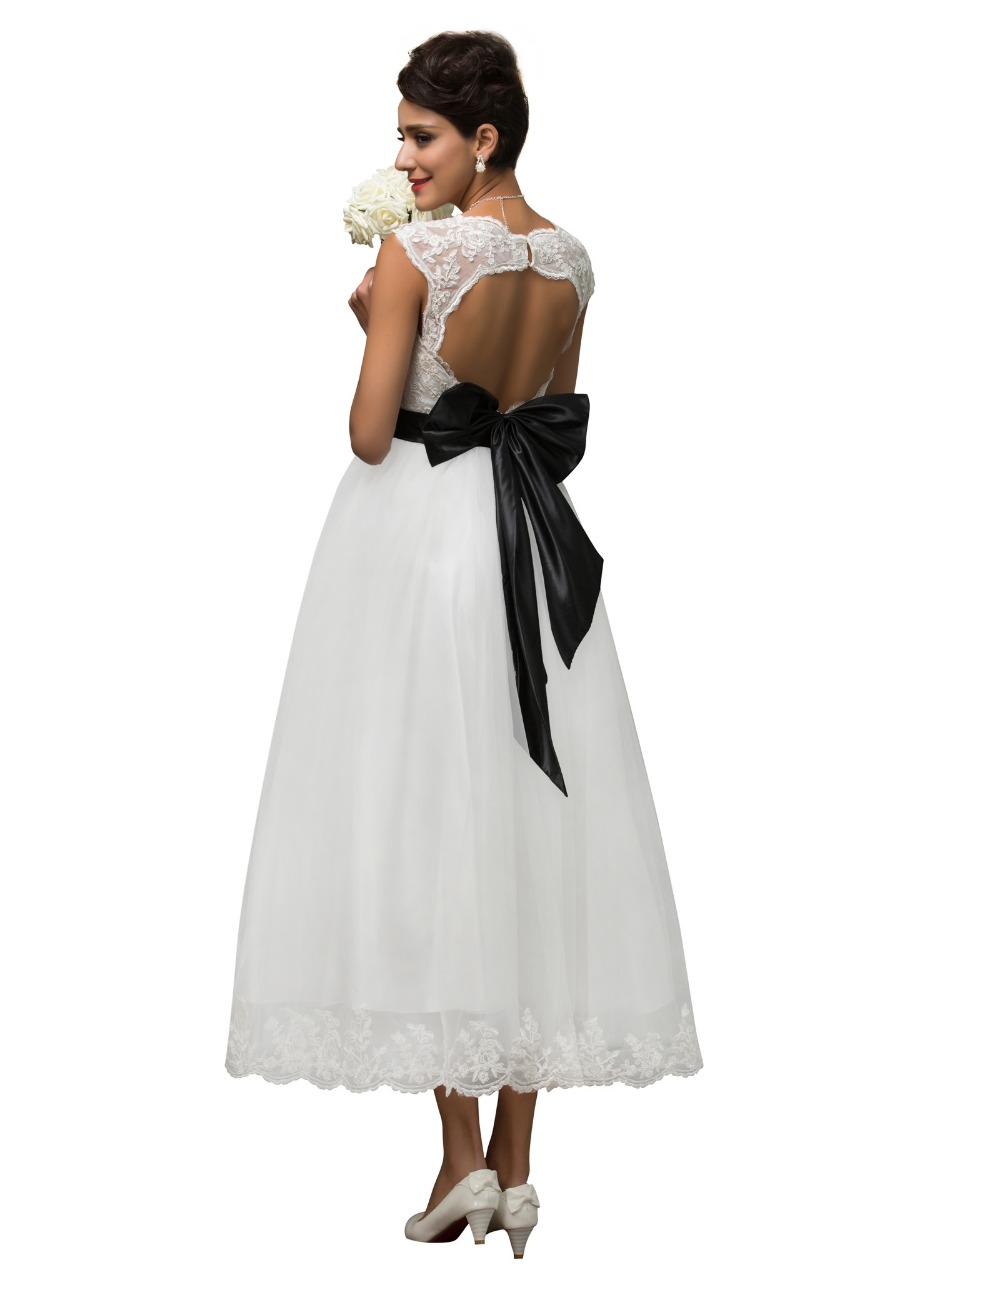 White bridesmaid dress age 4